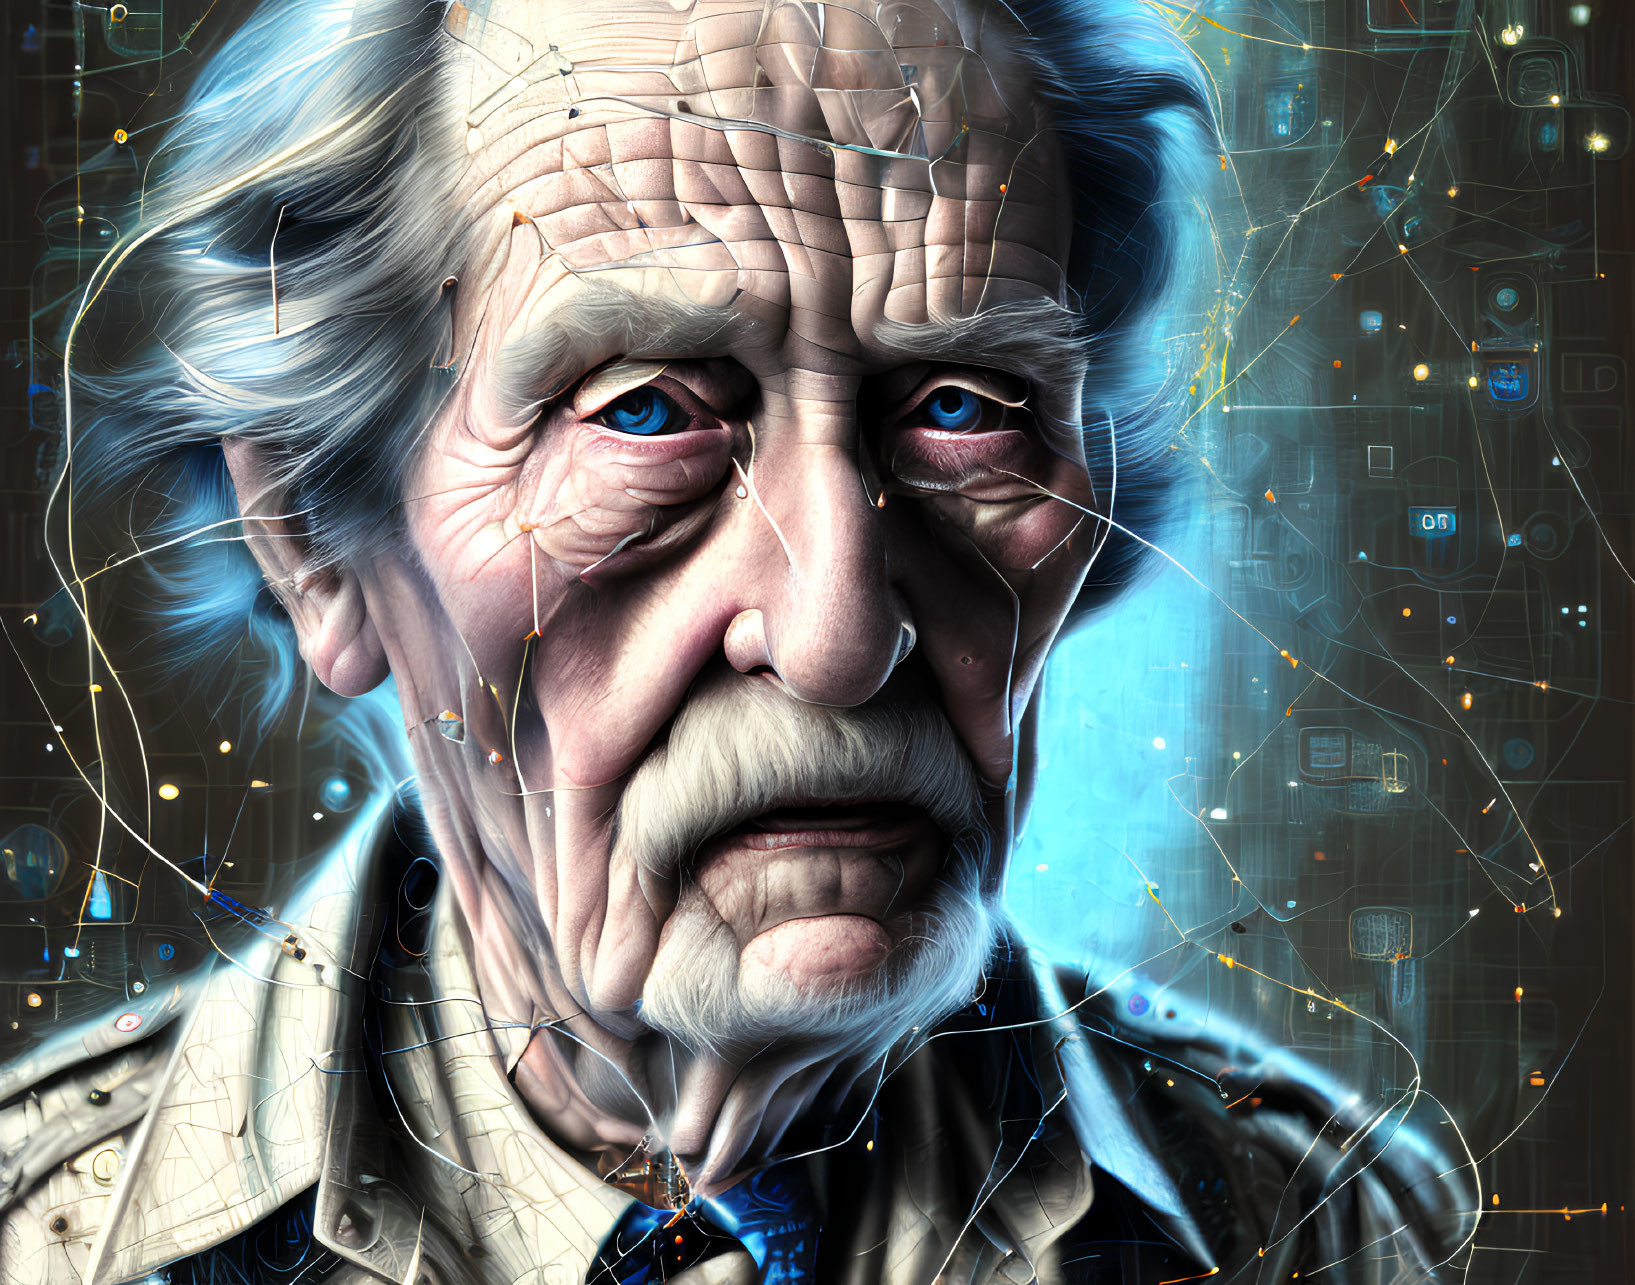 Detailed Digital Art: Elderly Man with Blue Eyes in Futuristic Setting